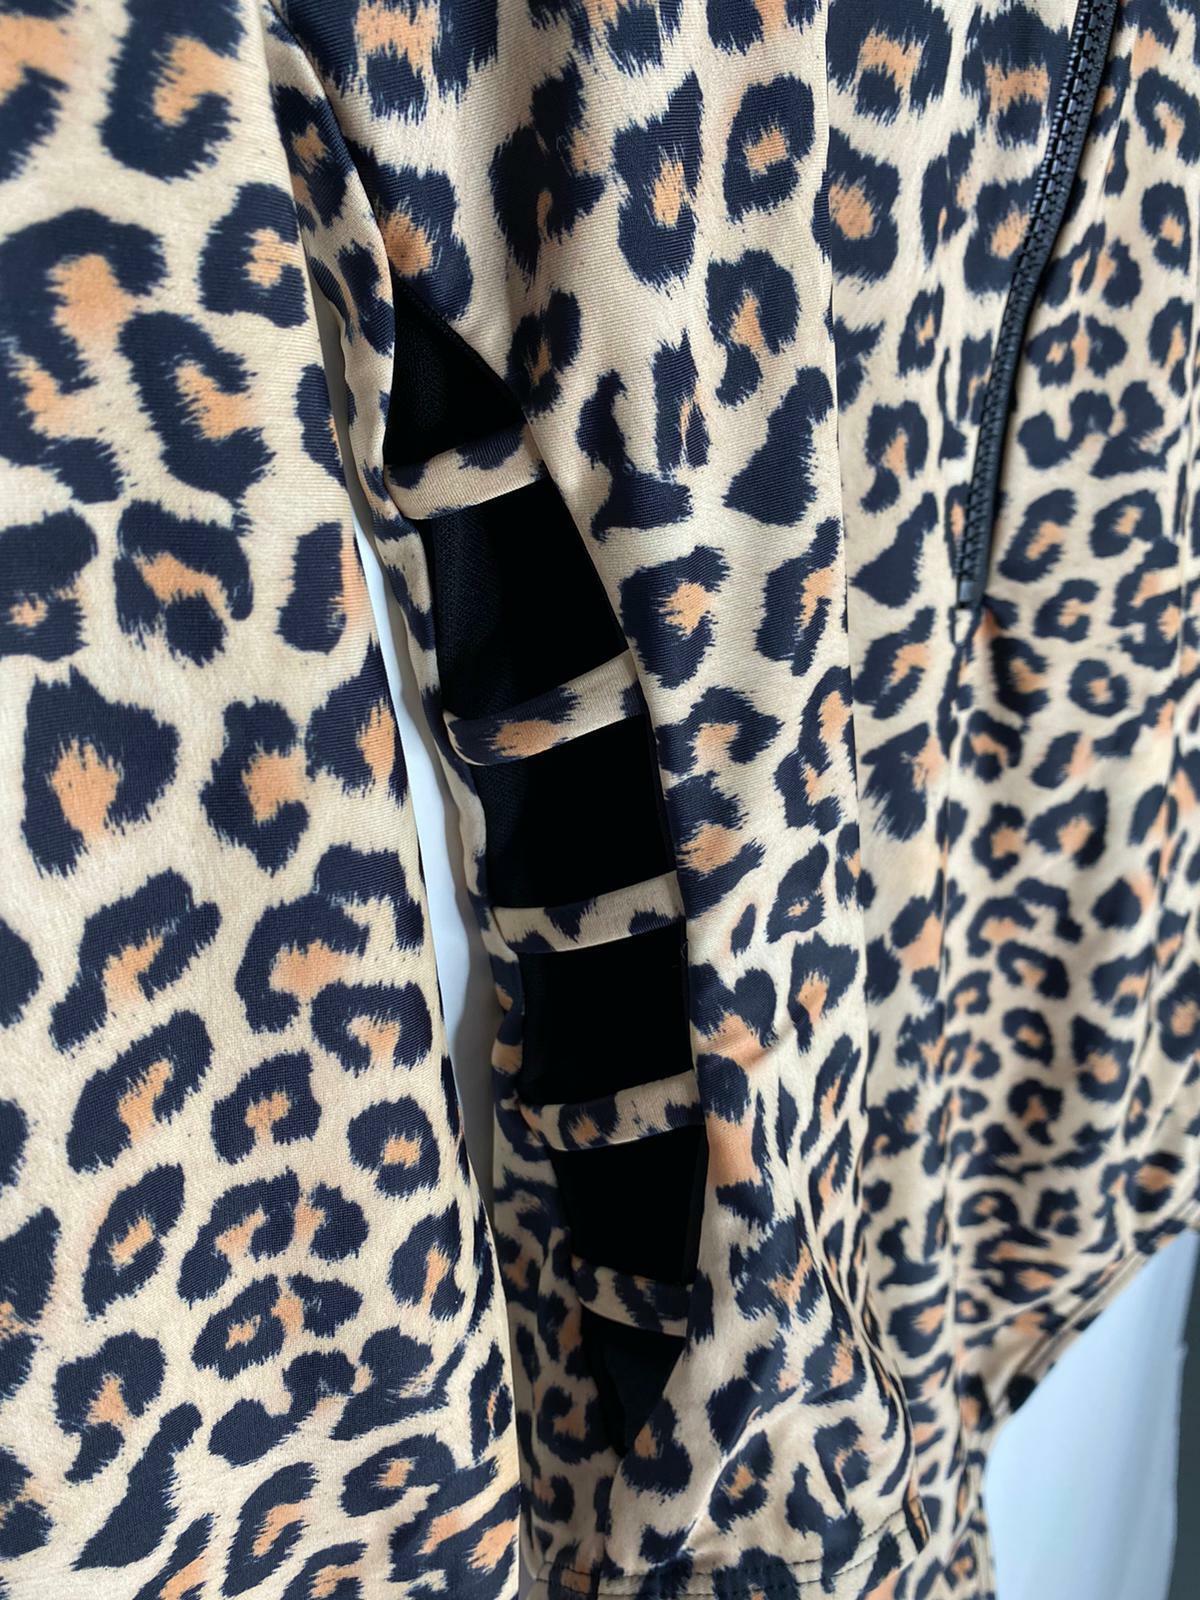 Ka'Lure Womens M Leopard Sleeved Cutout Zip Up Rashguard One Piece Swimsuit